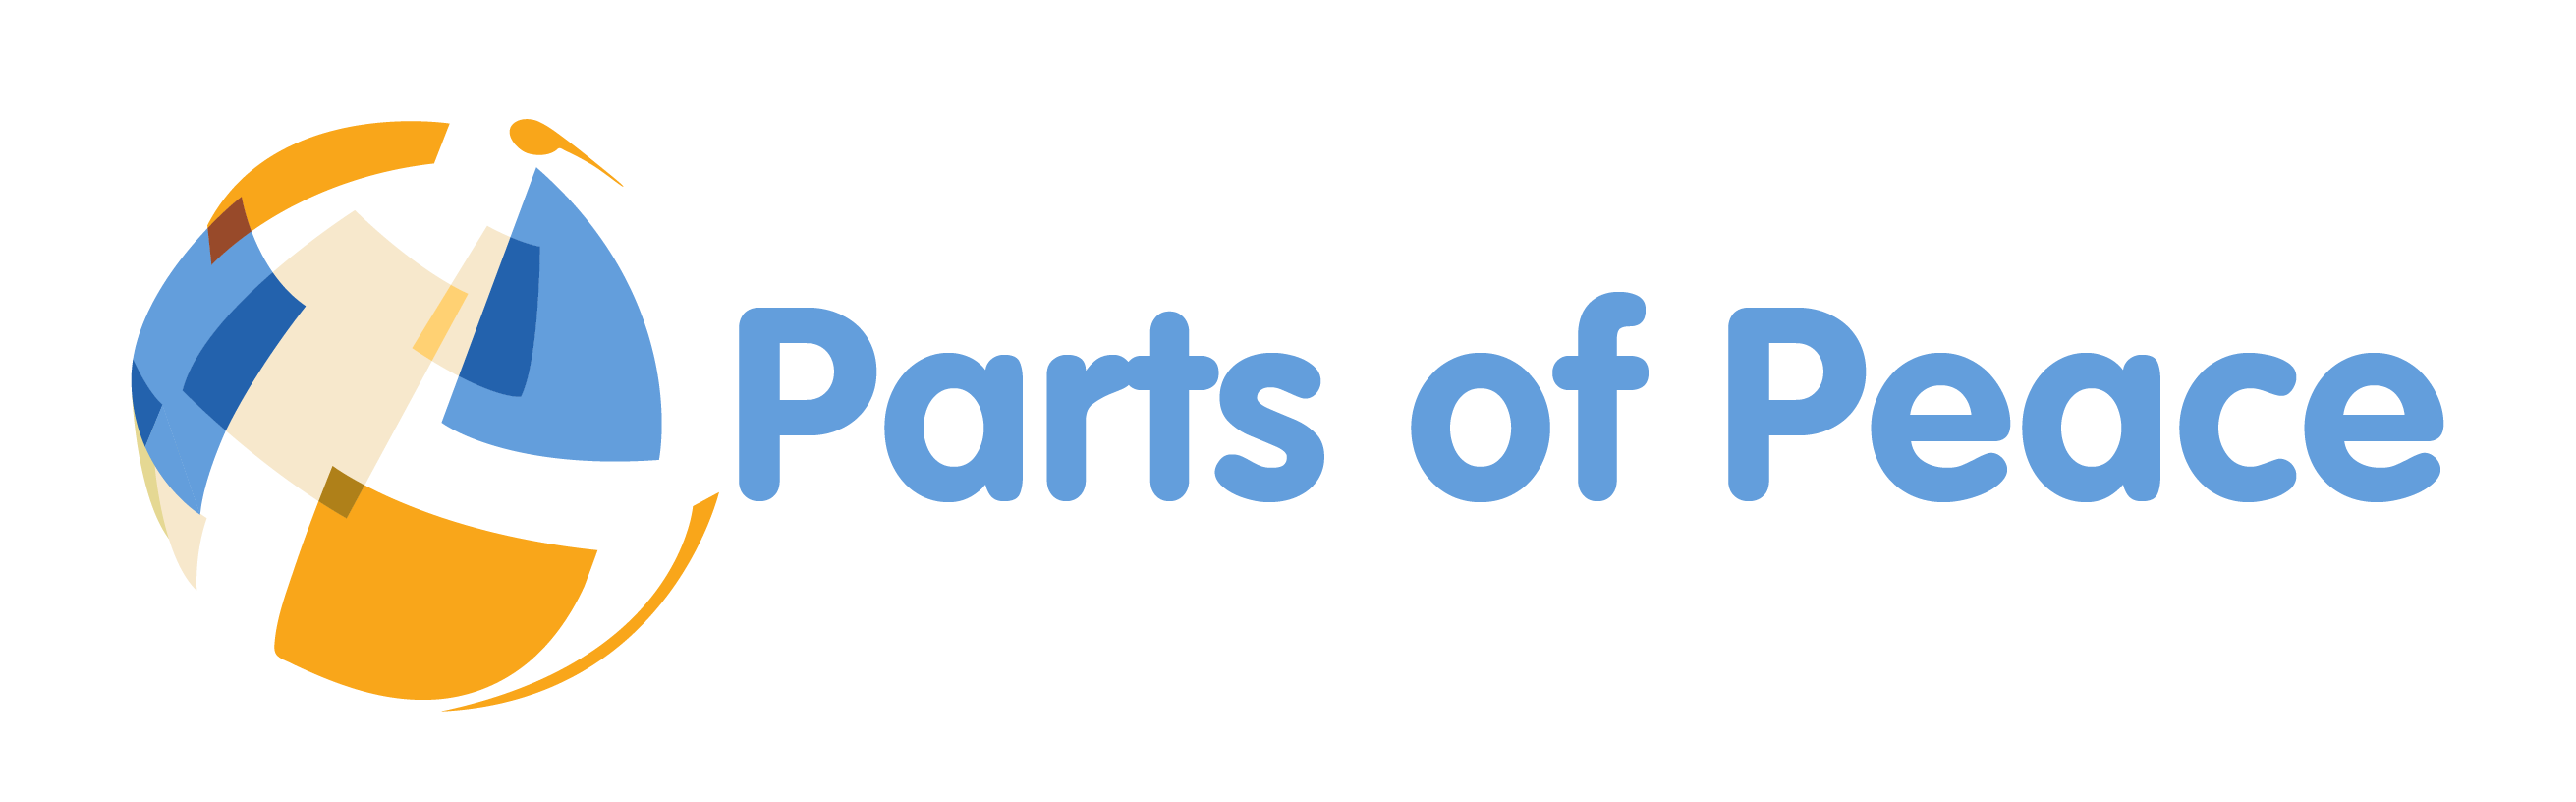 Parts of Peace logo